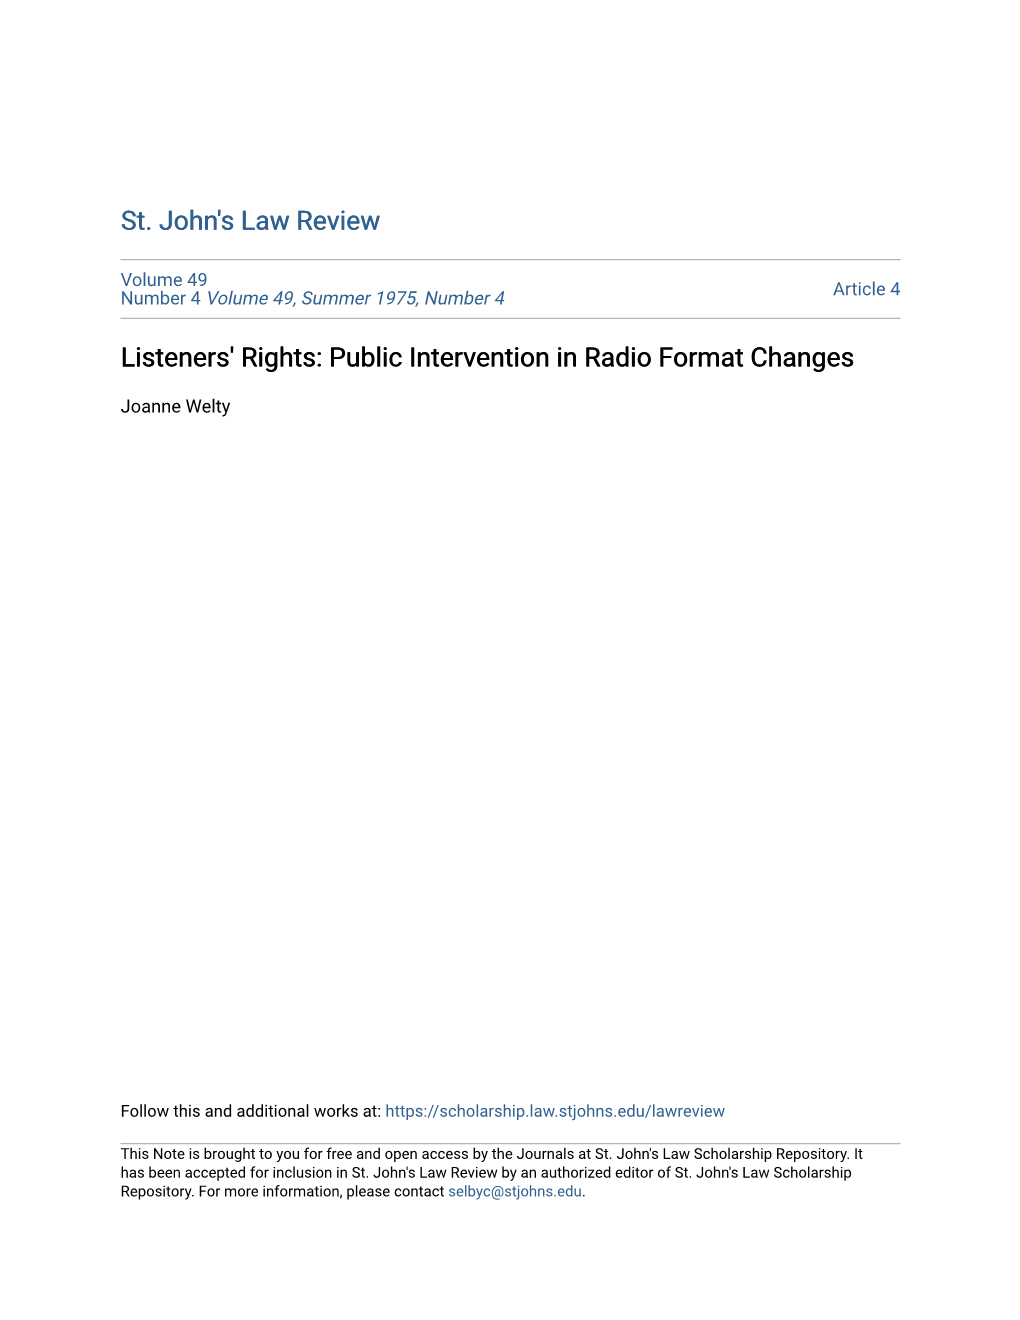 Public Intervention in Radio Format Changes